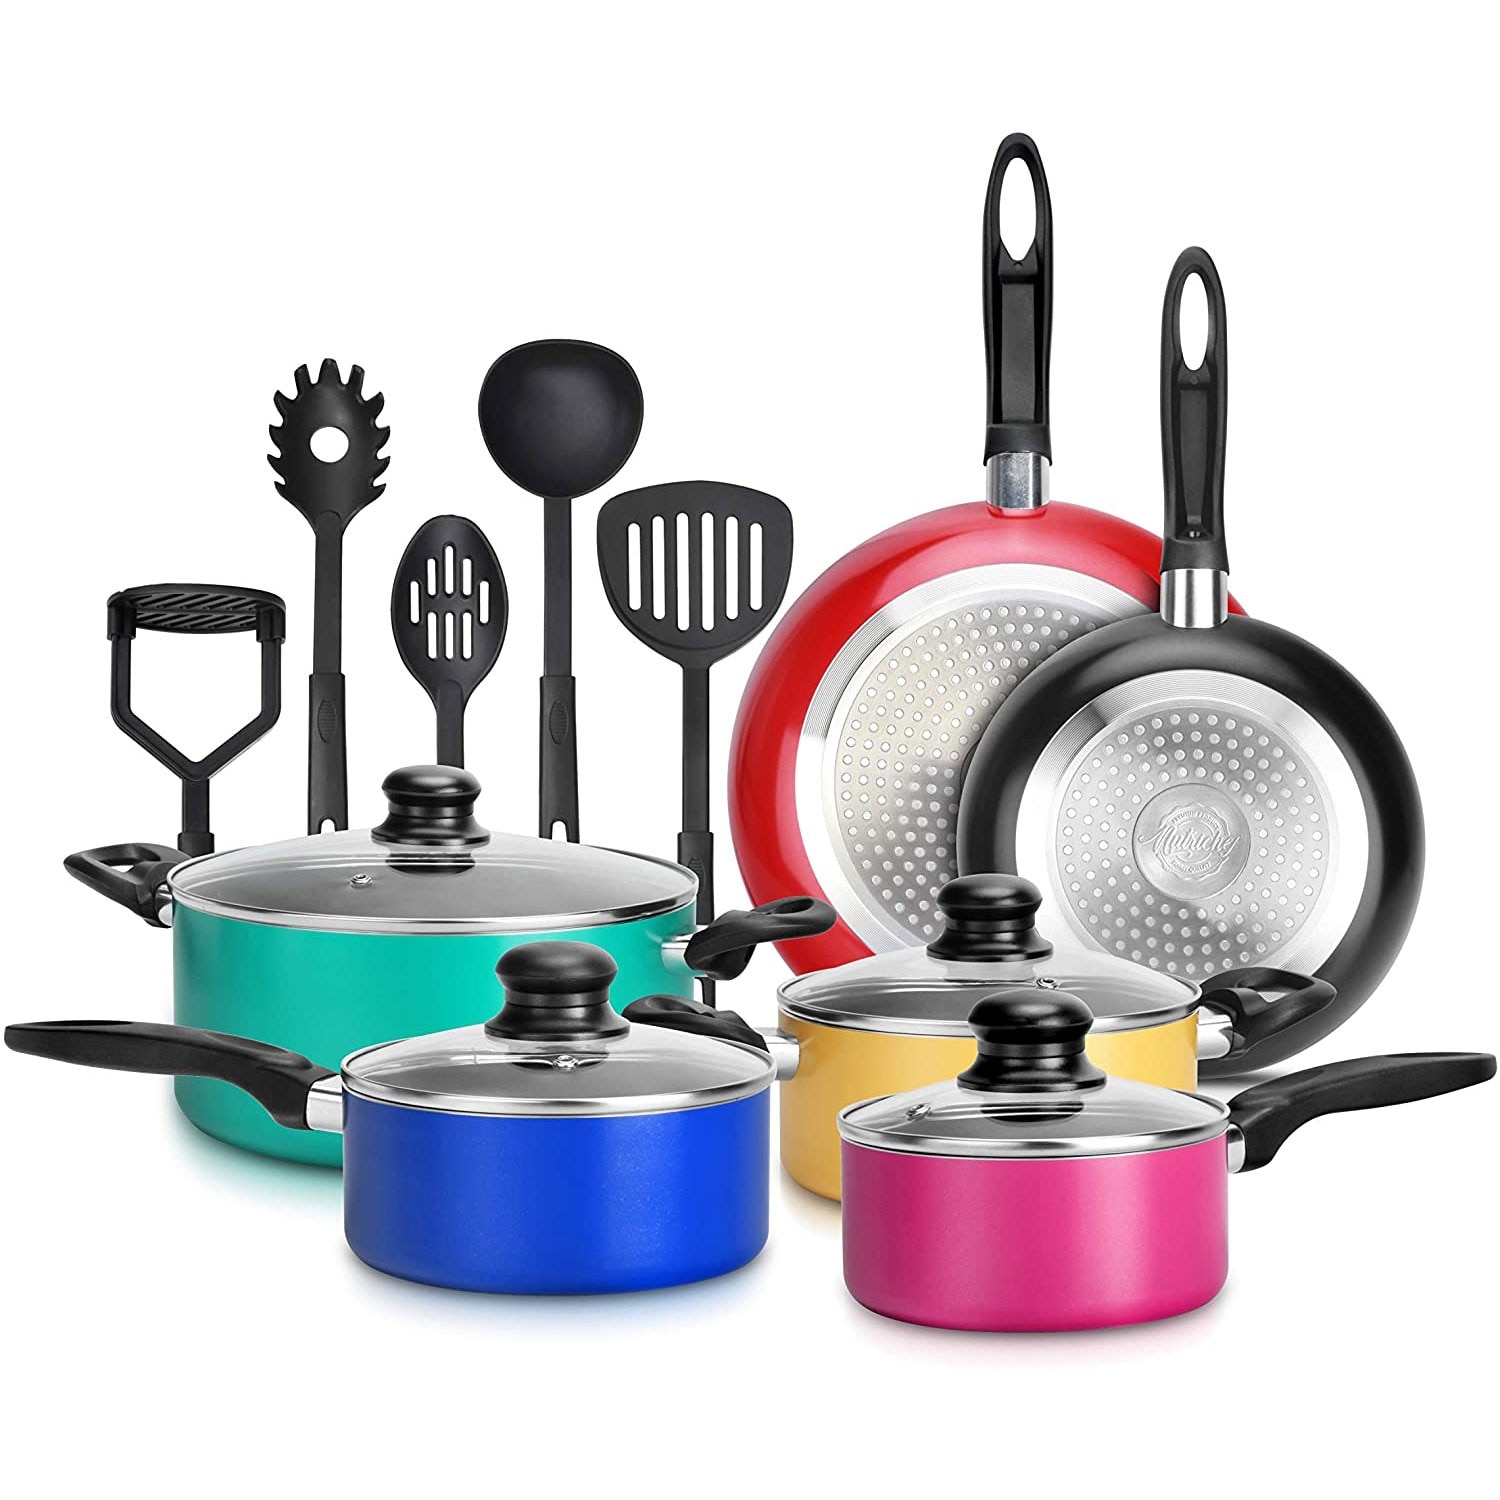 https://ak1.ostkcdn.com/images/products/is/images/direct/bd52f7d02e6764fb20bf3007dd73a27f416ef9e5/Nutrichef-15-Piece-Nonstick-Kitchen-Pots-Pans-Utensils-Cookware-Set%2C-Multicolor.jpg